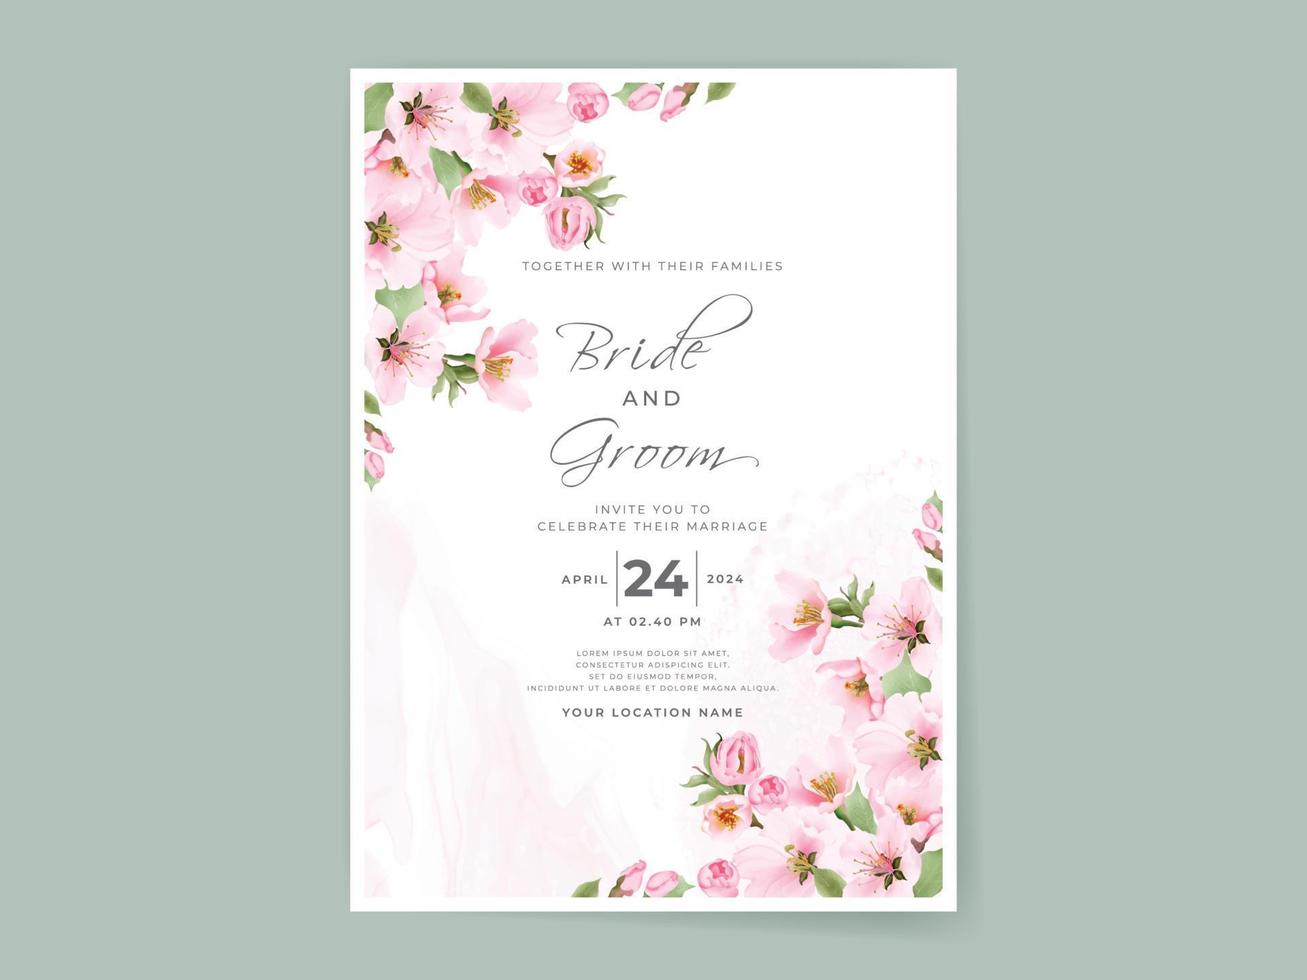 Beautiful soft pink sakura wedding invitation card template vector